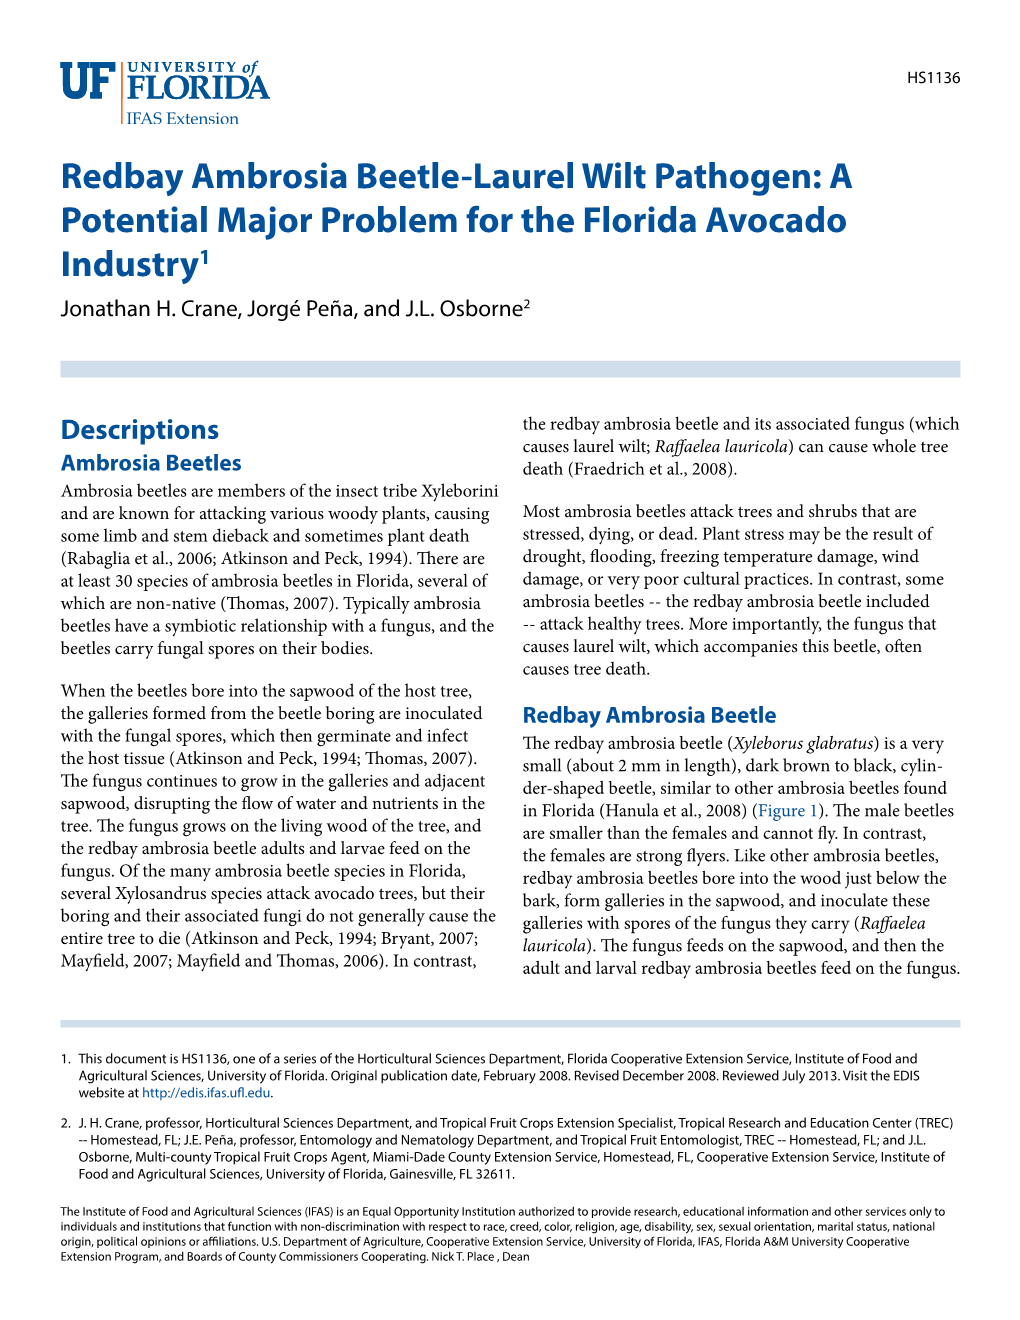 Redbay Ambrosia Beetle-Laurel Wilt Pathogen: a Potential Major Problem for the Florida Avocado Industry1 Jonathan H